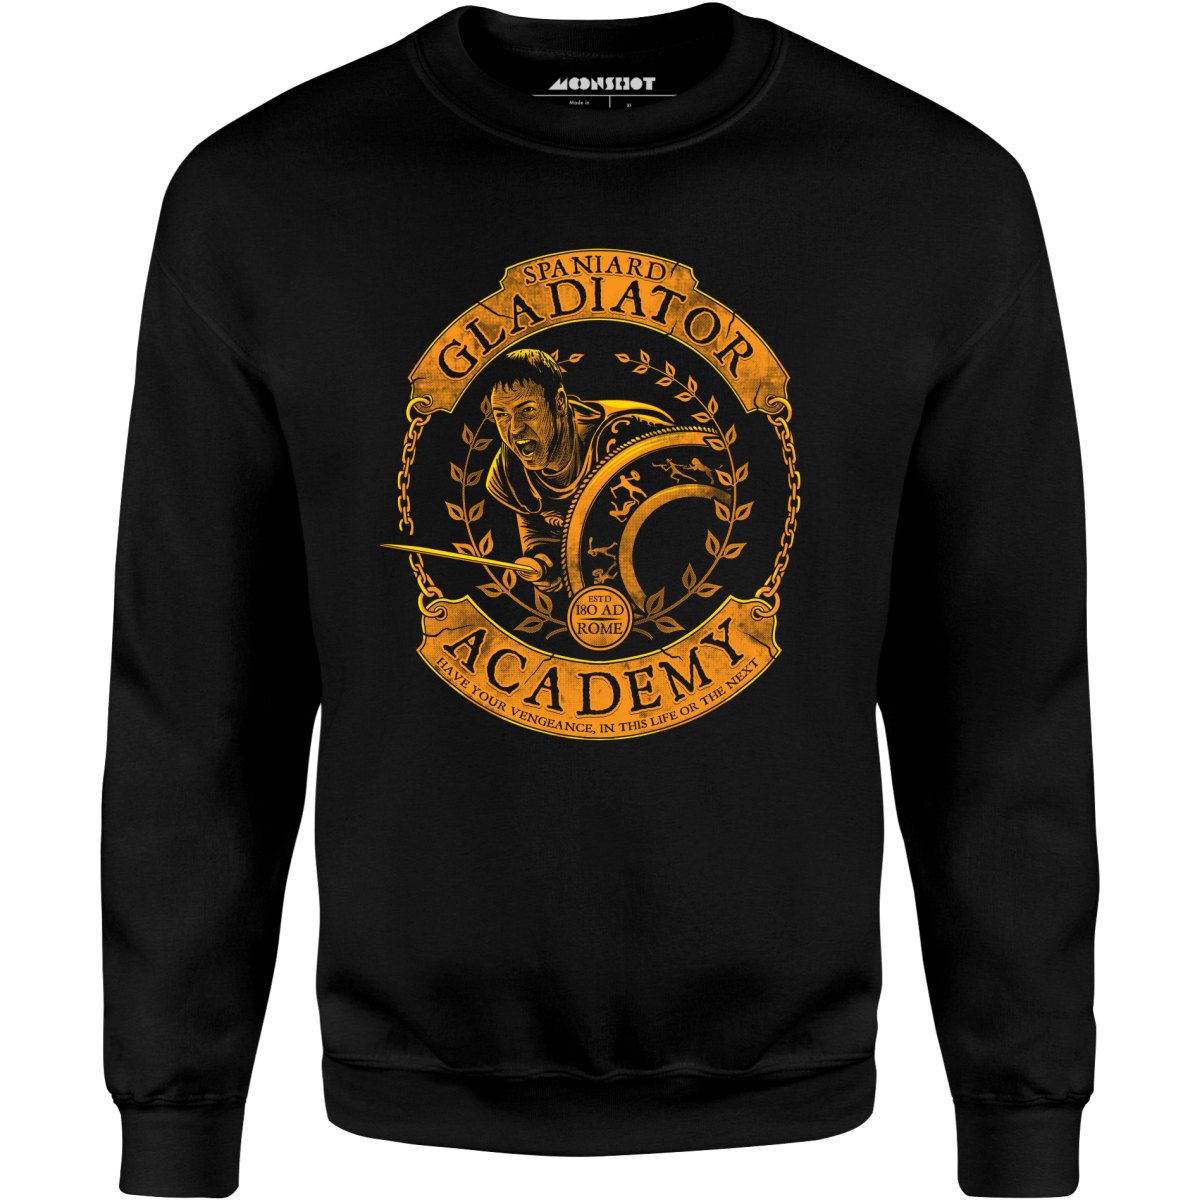 Spaniard Gladiator Academy - Unisex Sweatshirt